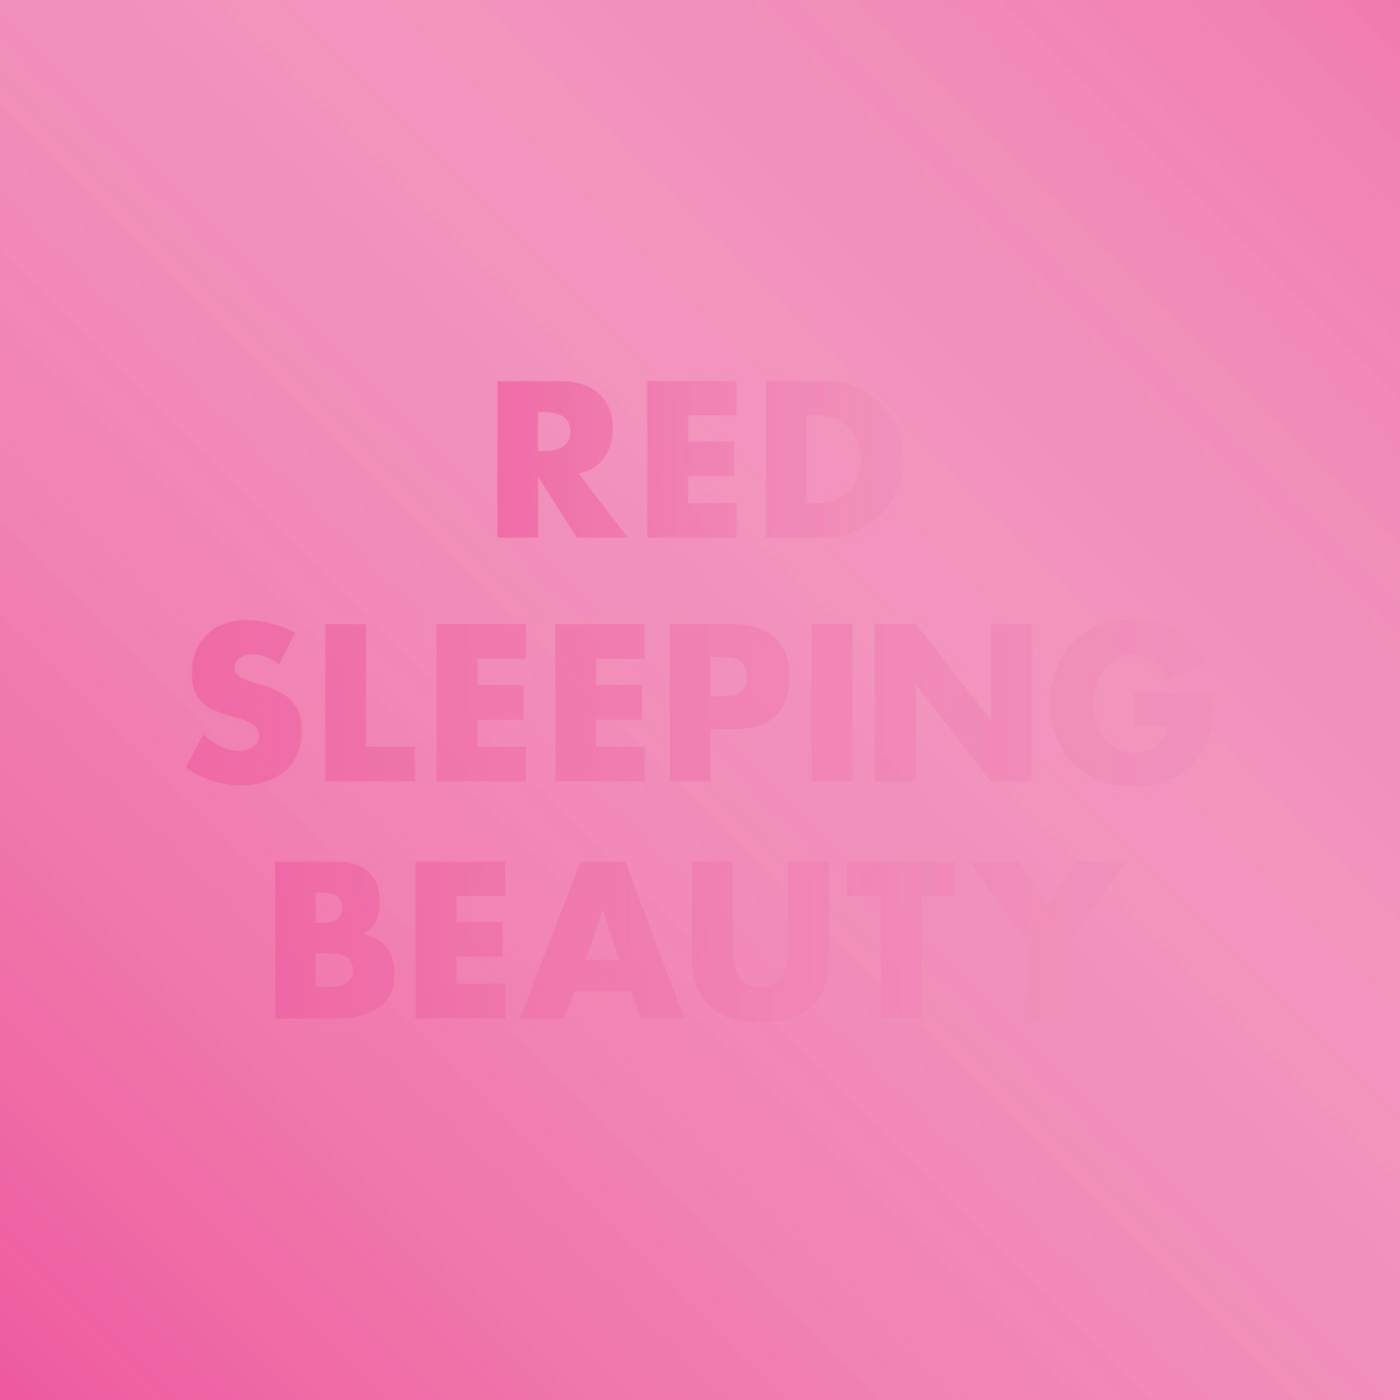 Red Sleeping Beauty Mi Amor Vinyl Record